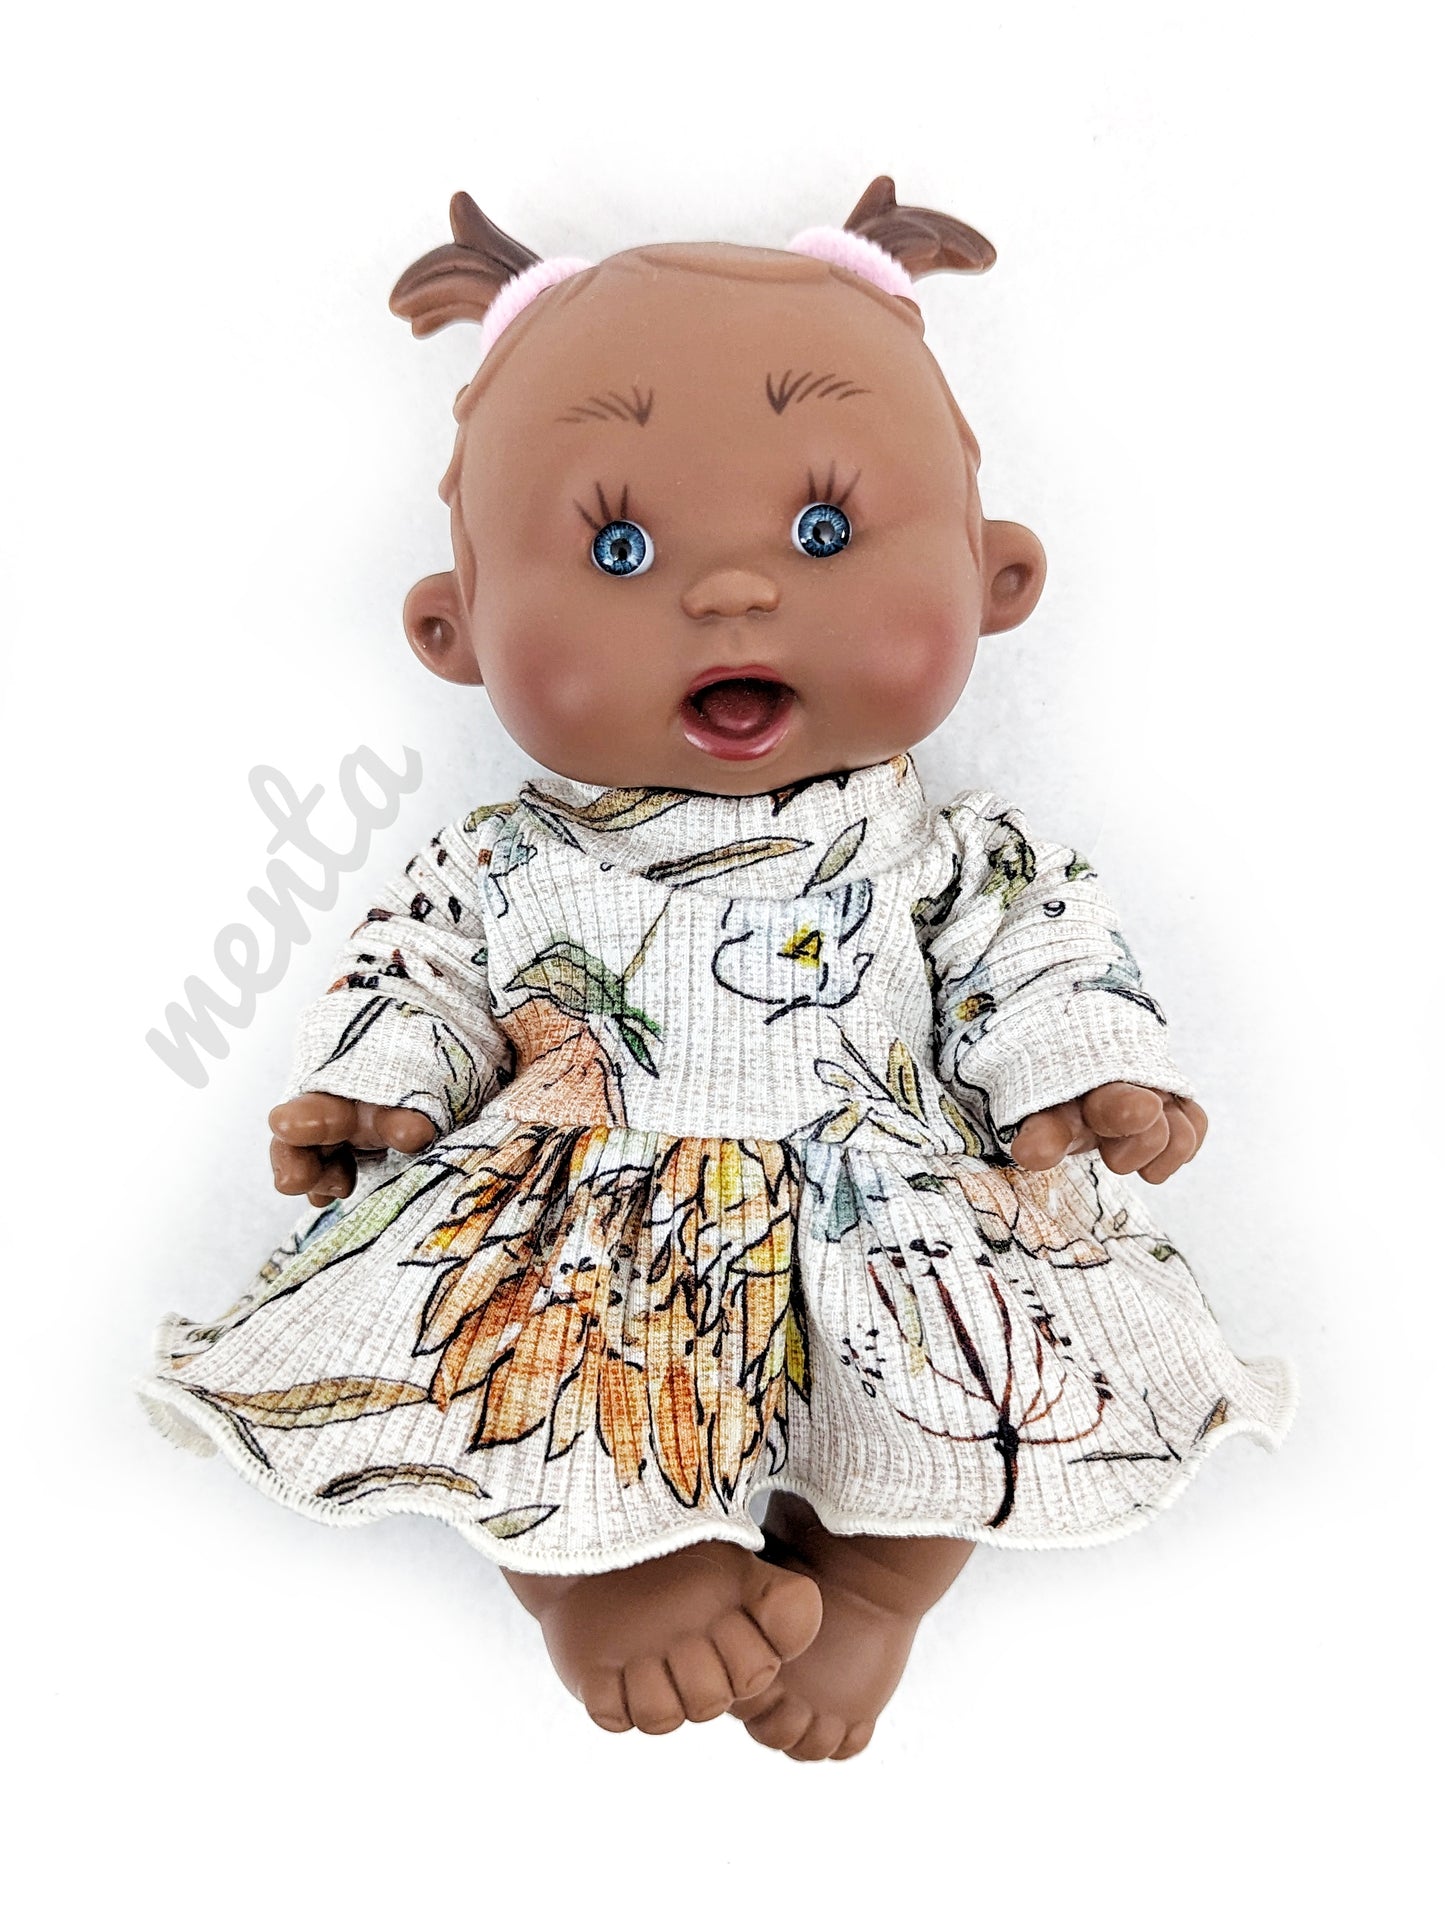 Dolman Shirt, Dress and Romper 8" Doll